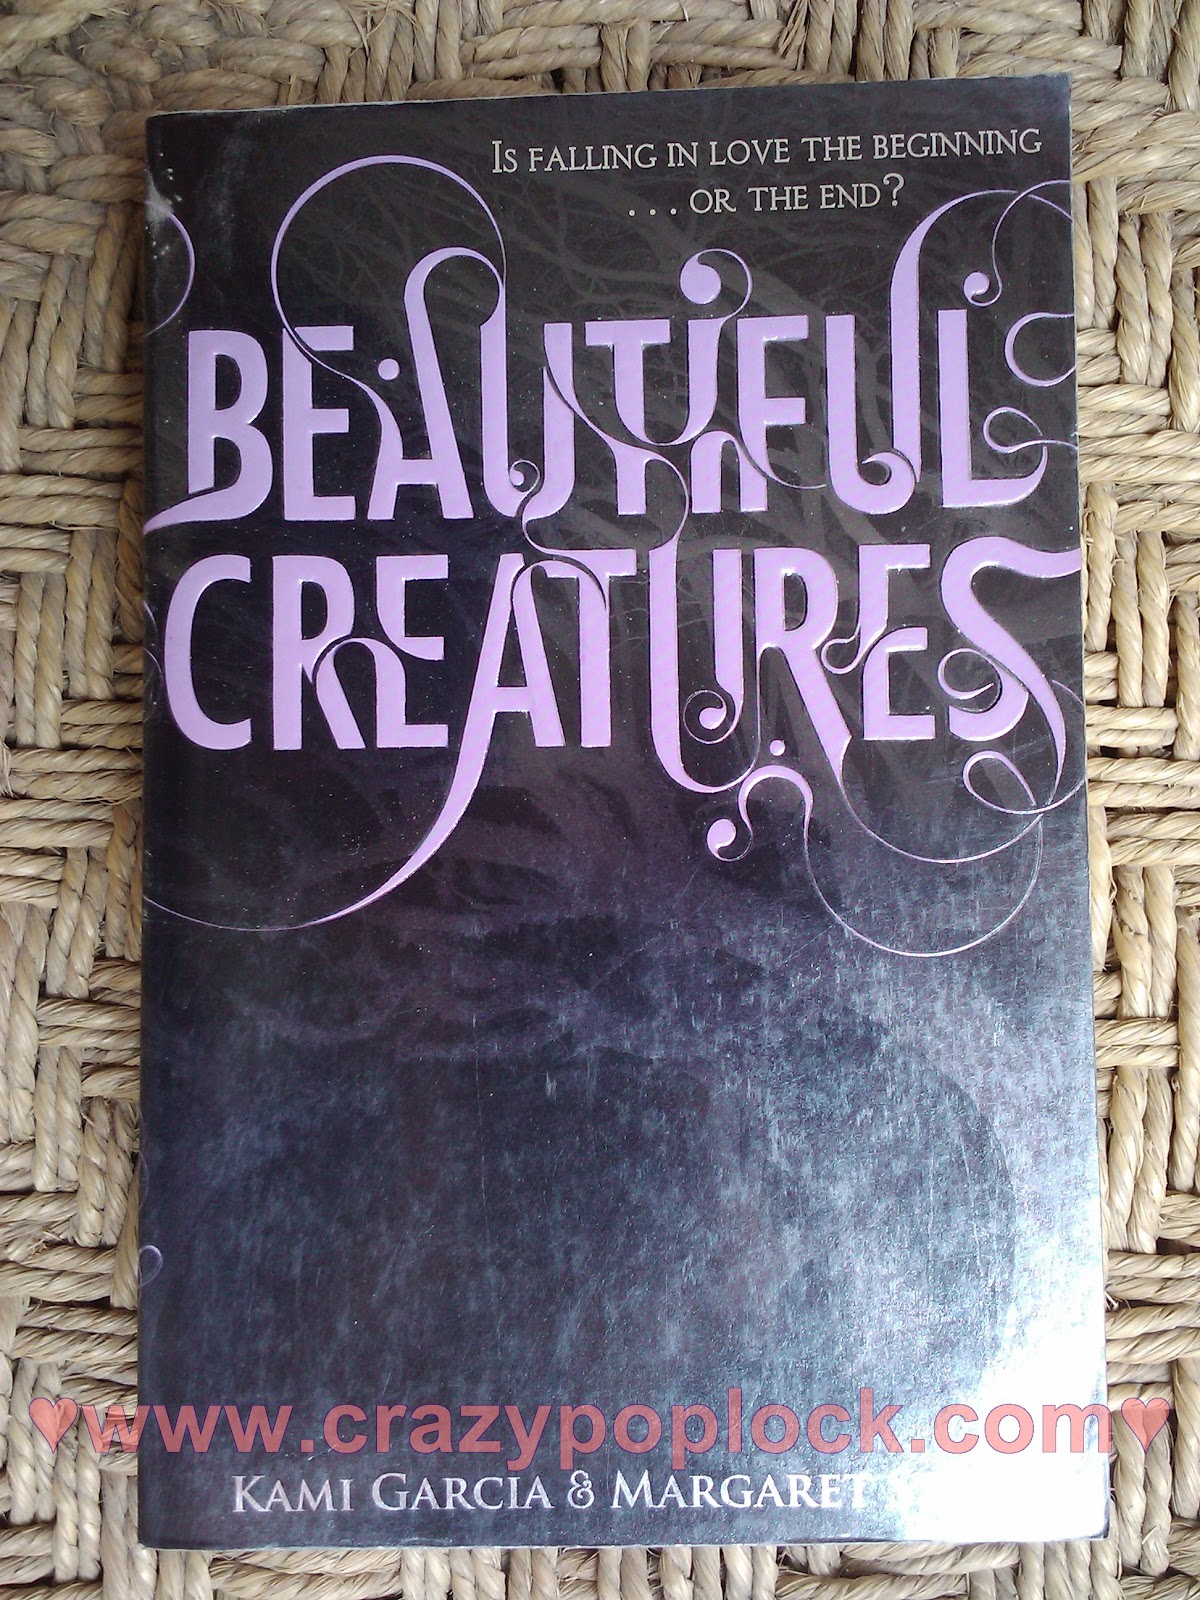 Beautiful Creatures Book 1 Summary